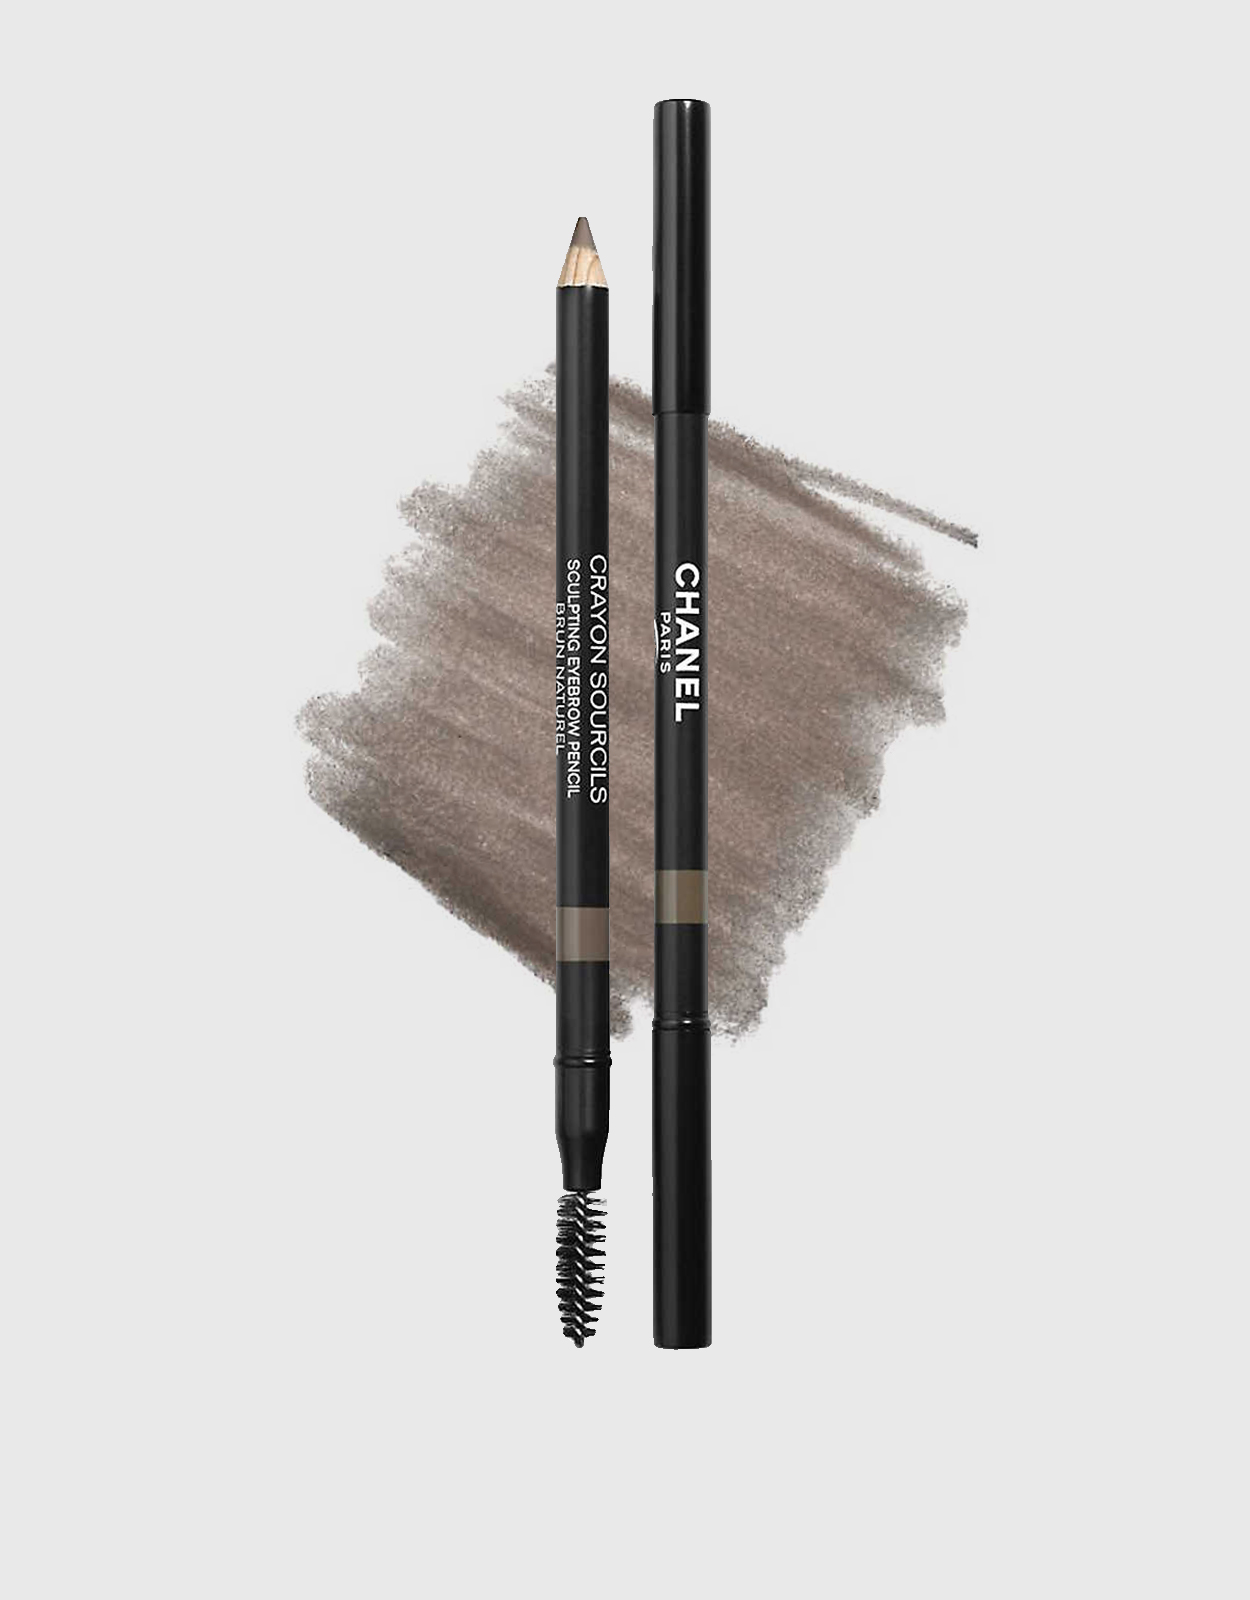 Chanel Beauty Crayon Sourcils Sculpting Eyebrow Pencil-30 Brun